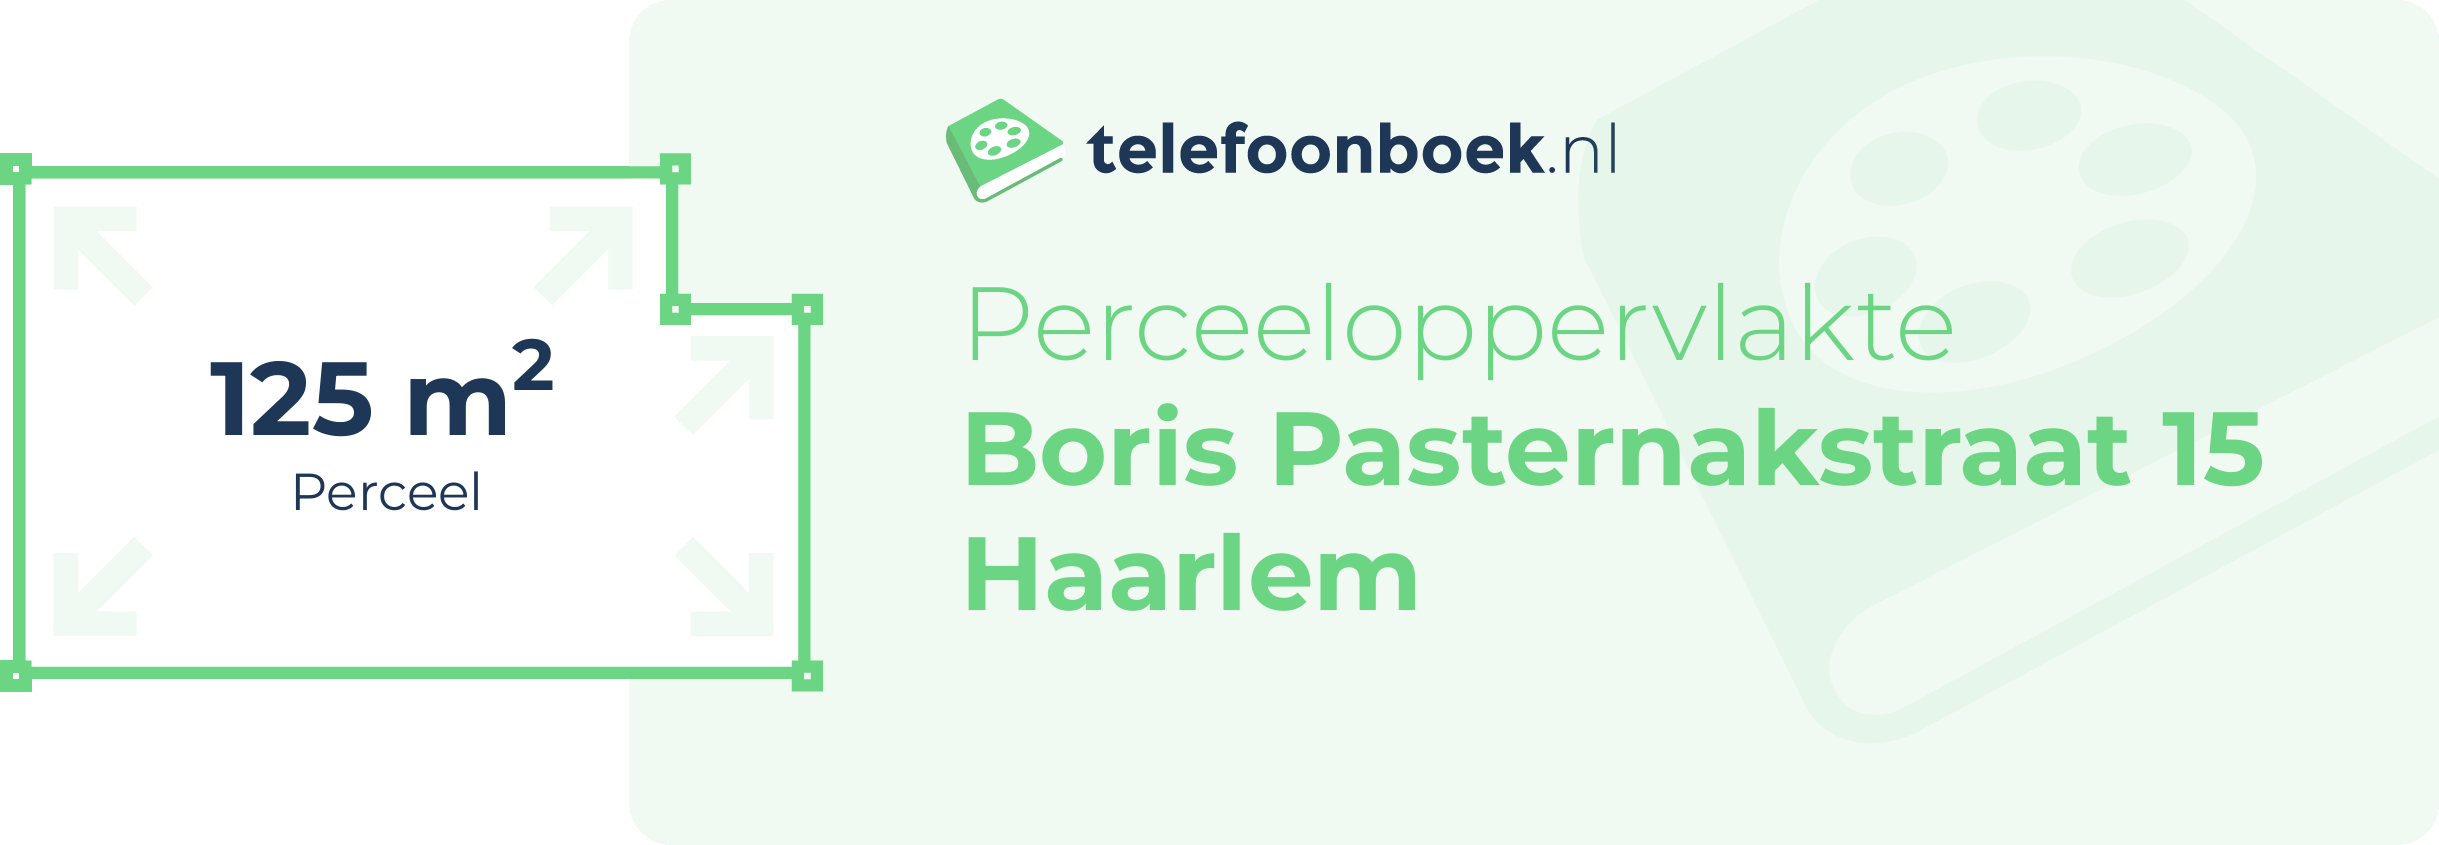 Perceeloppervlakte Boris Pasternakstraat 15 Haarlem